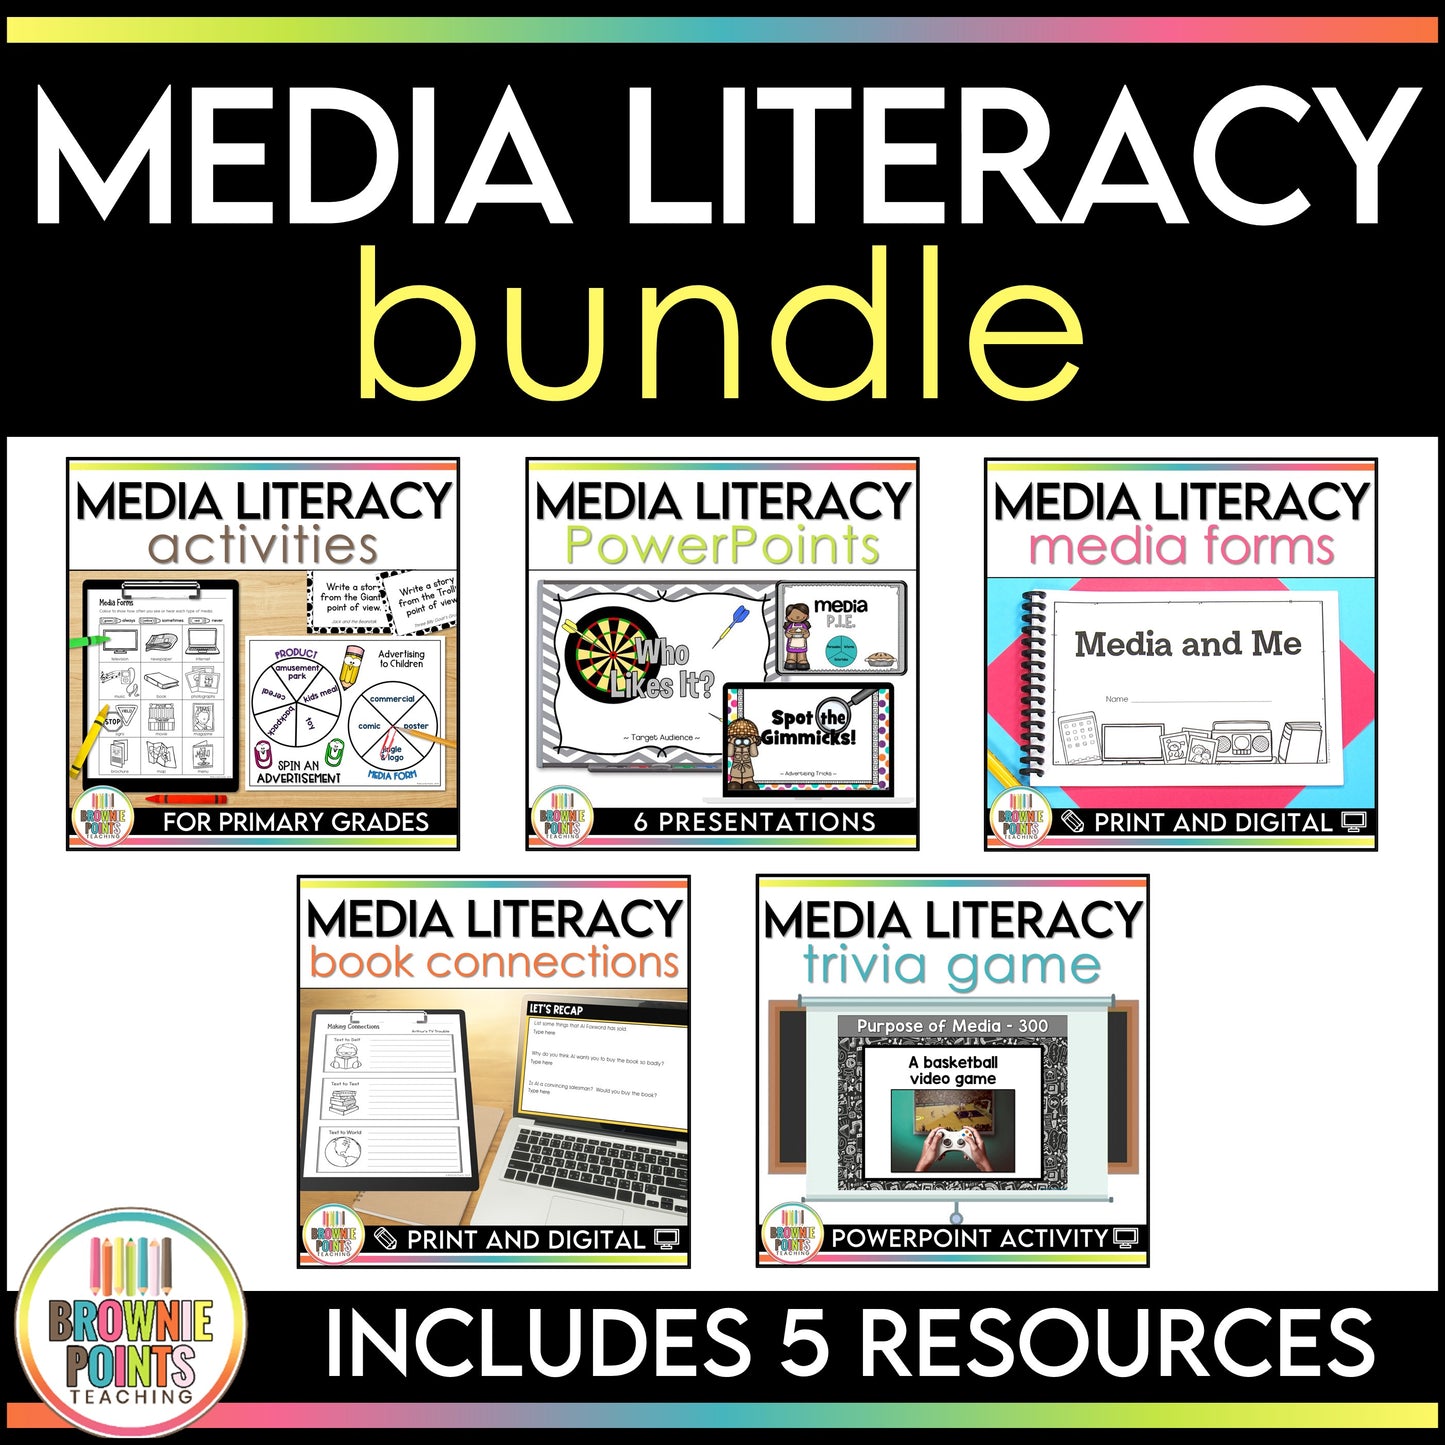 Media Literacy Bundle